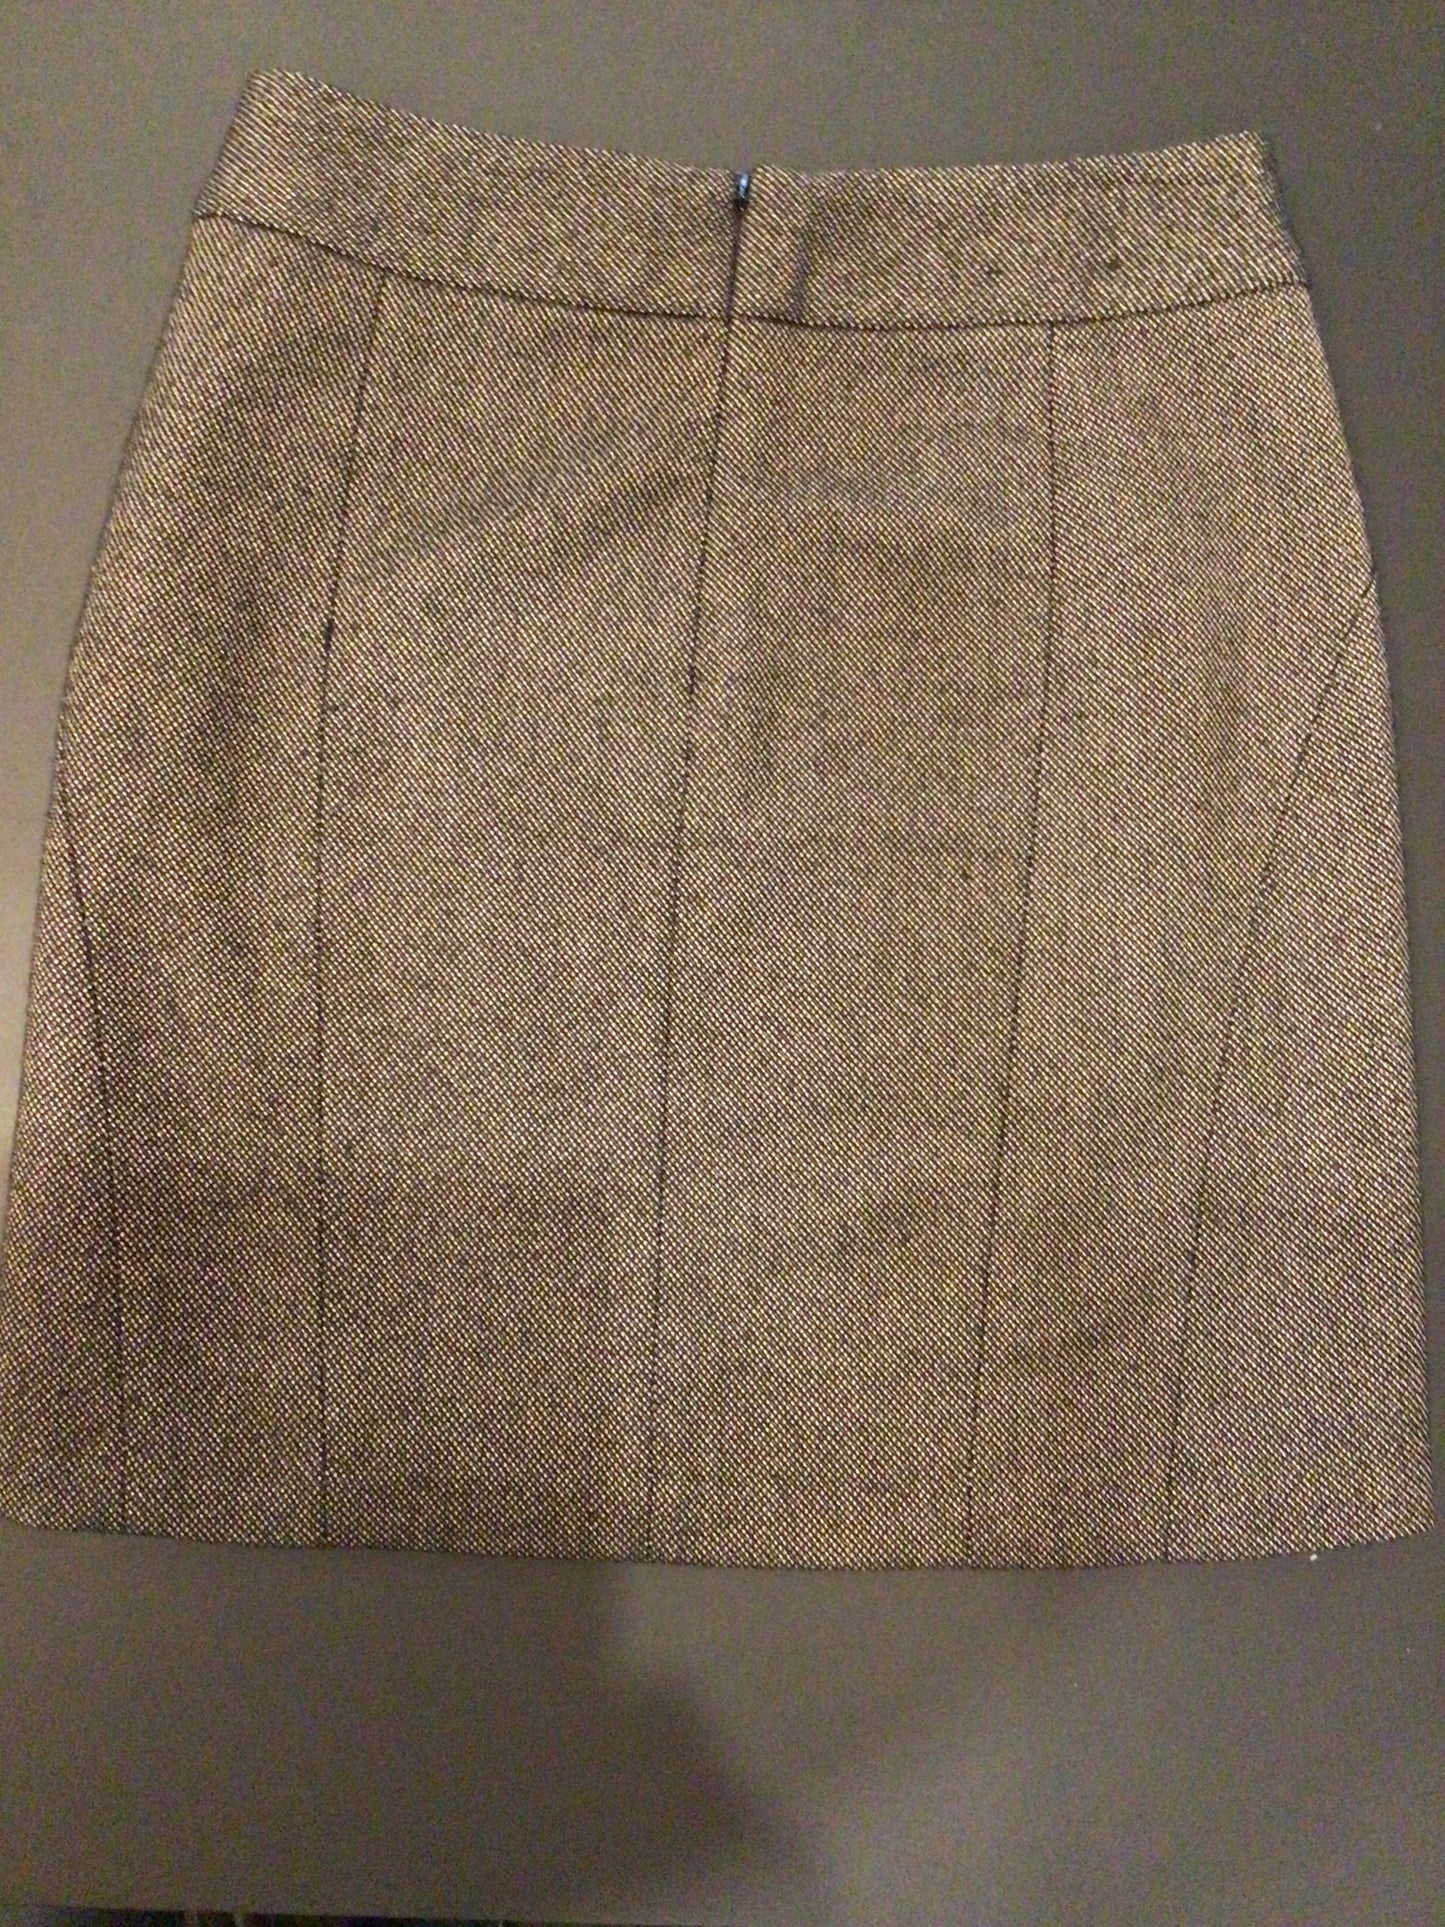 Consignment 1915-08 Banana Republic brown tweed skirt. Size 0 Petit.